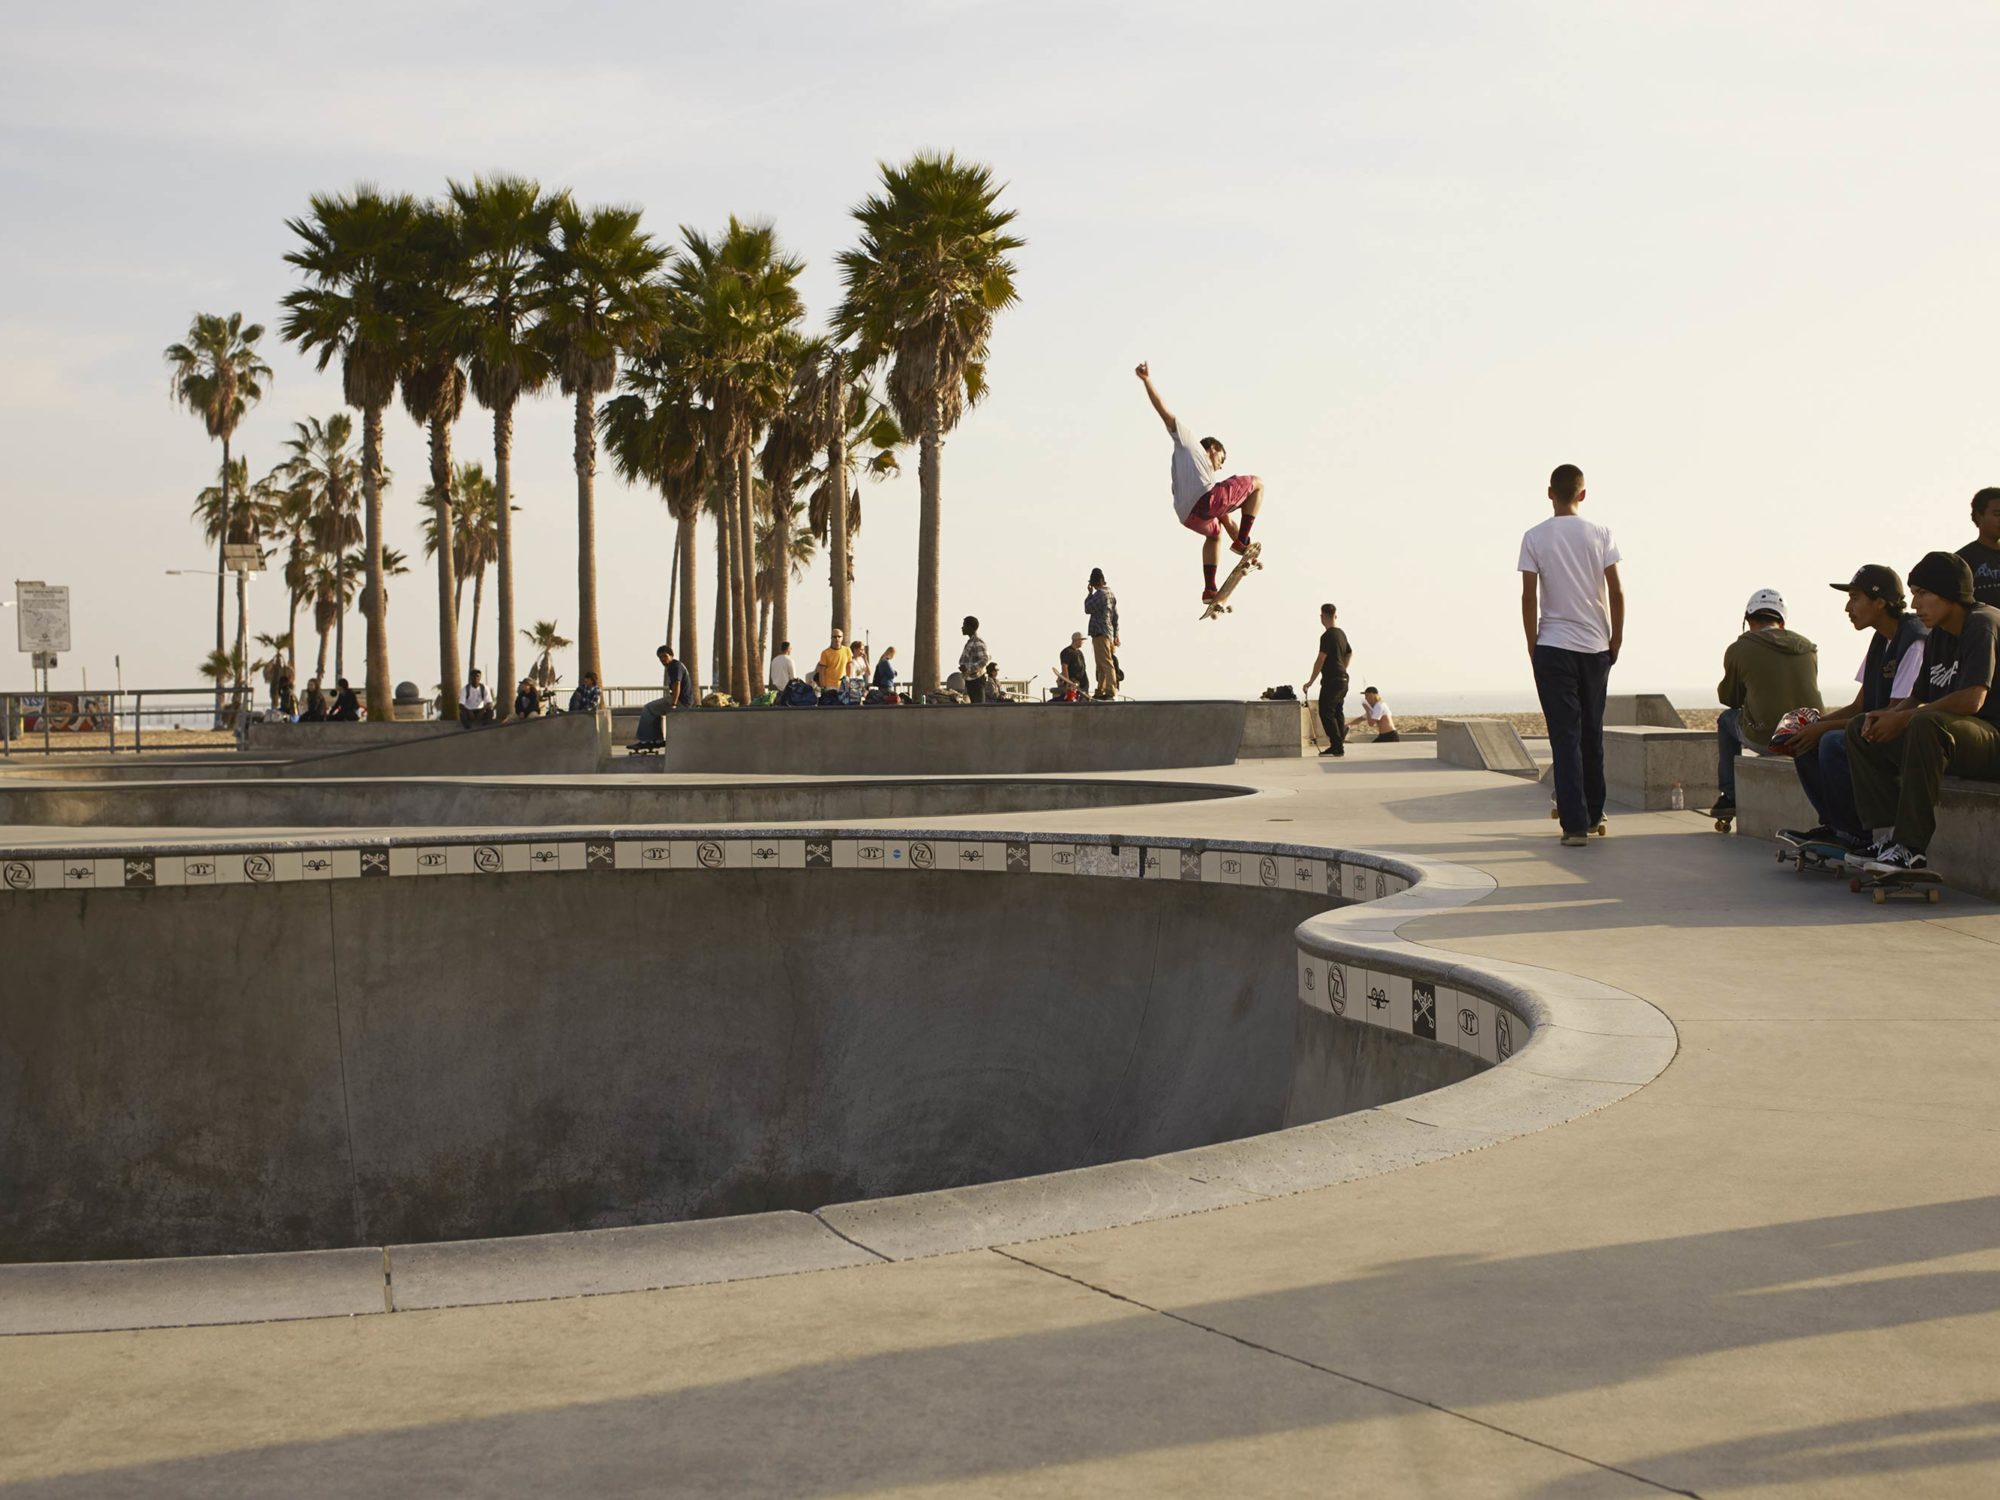 Air - Skate Park, Venice Beach Collection - Fine Art Photography by Toby Dixon